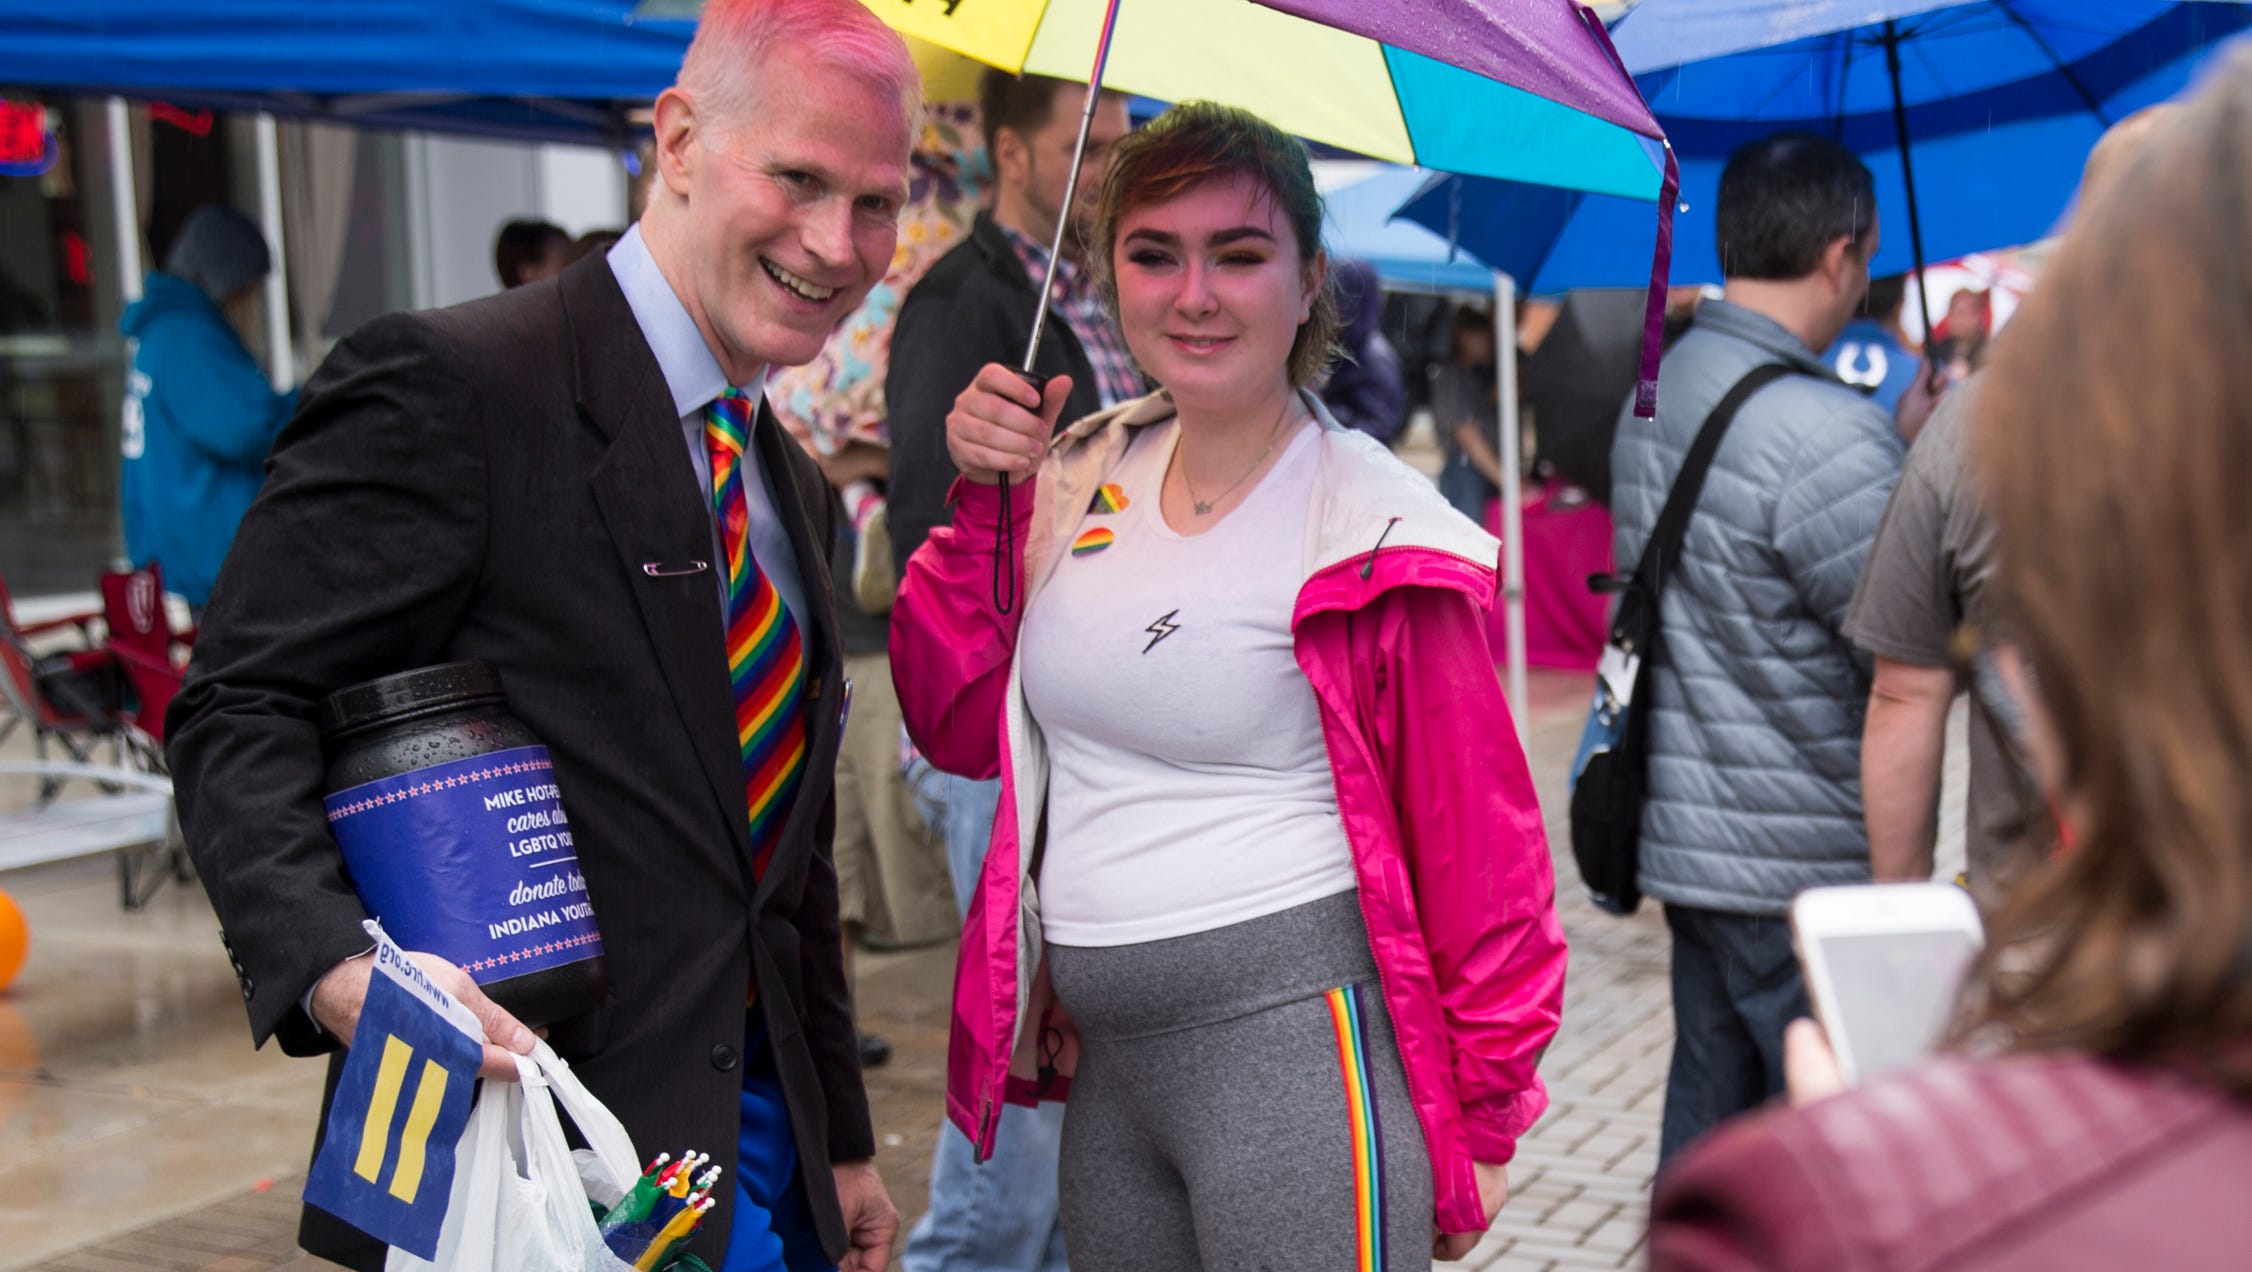 Columbus gay pride festival draws bigger crowd than expected